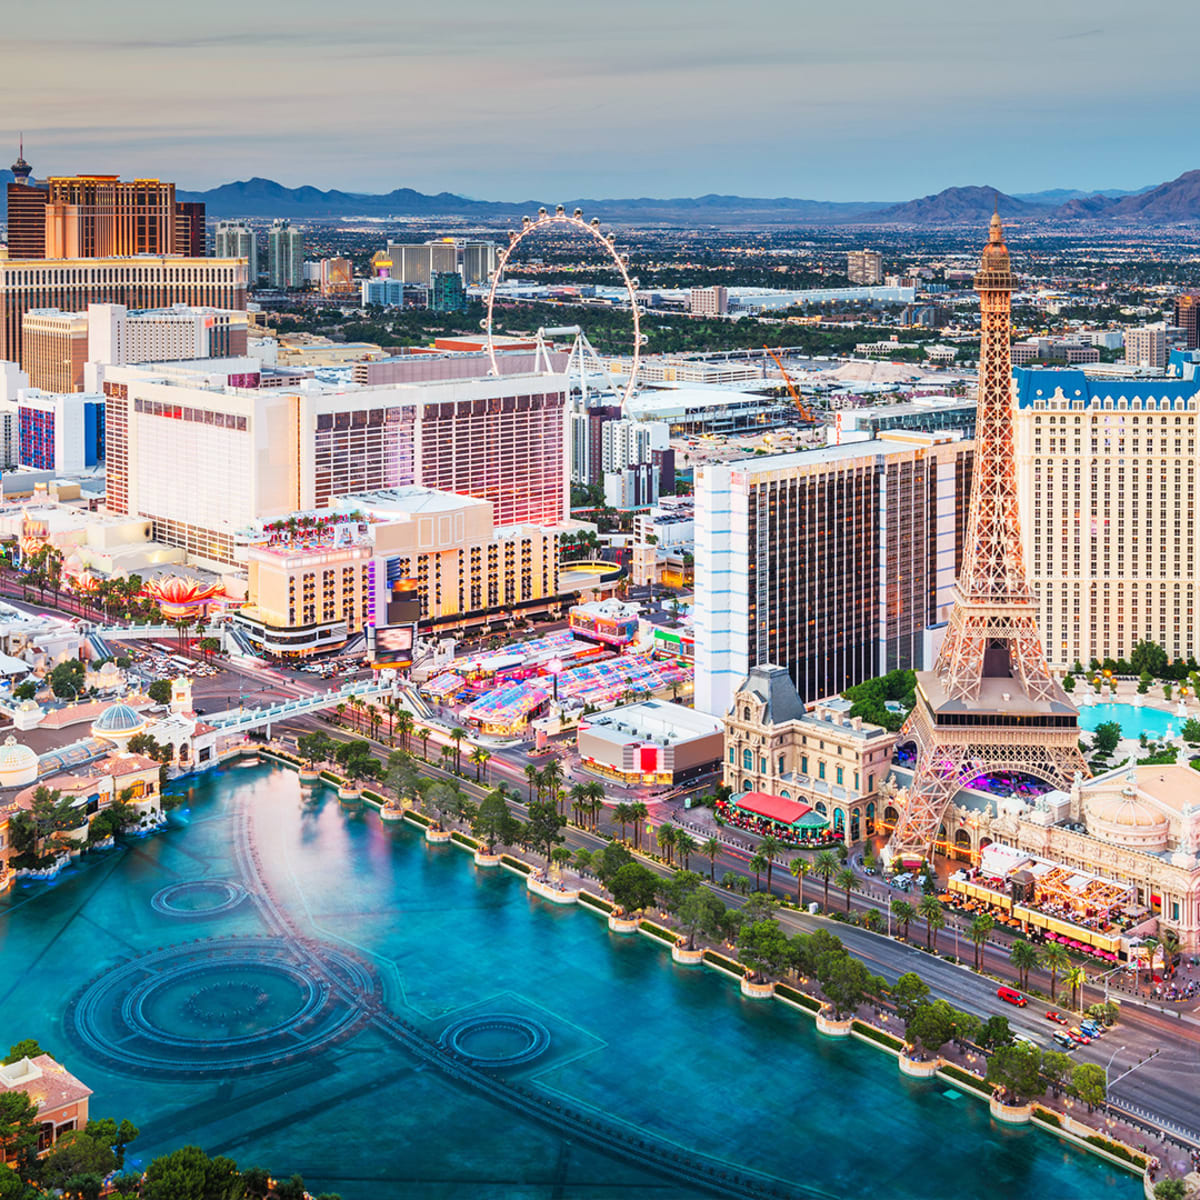 Caesars' Las Vegas Strip properties may be up for grabs